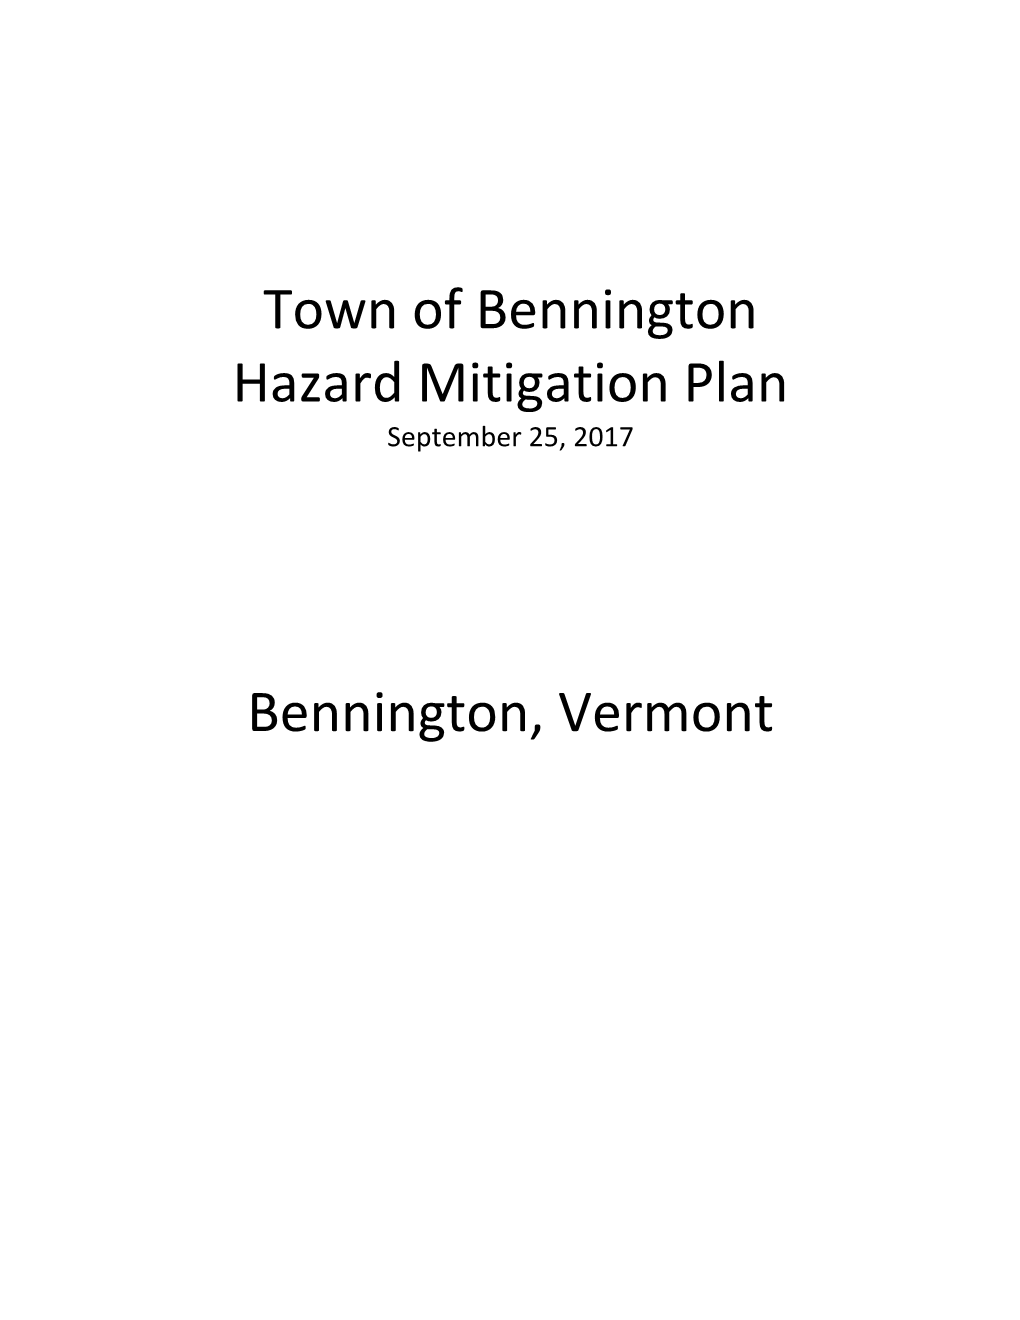 Town of Bennington Hazard Mitigation Plan Bennington, Vermont